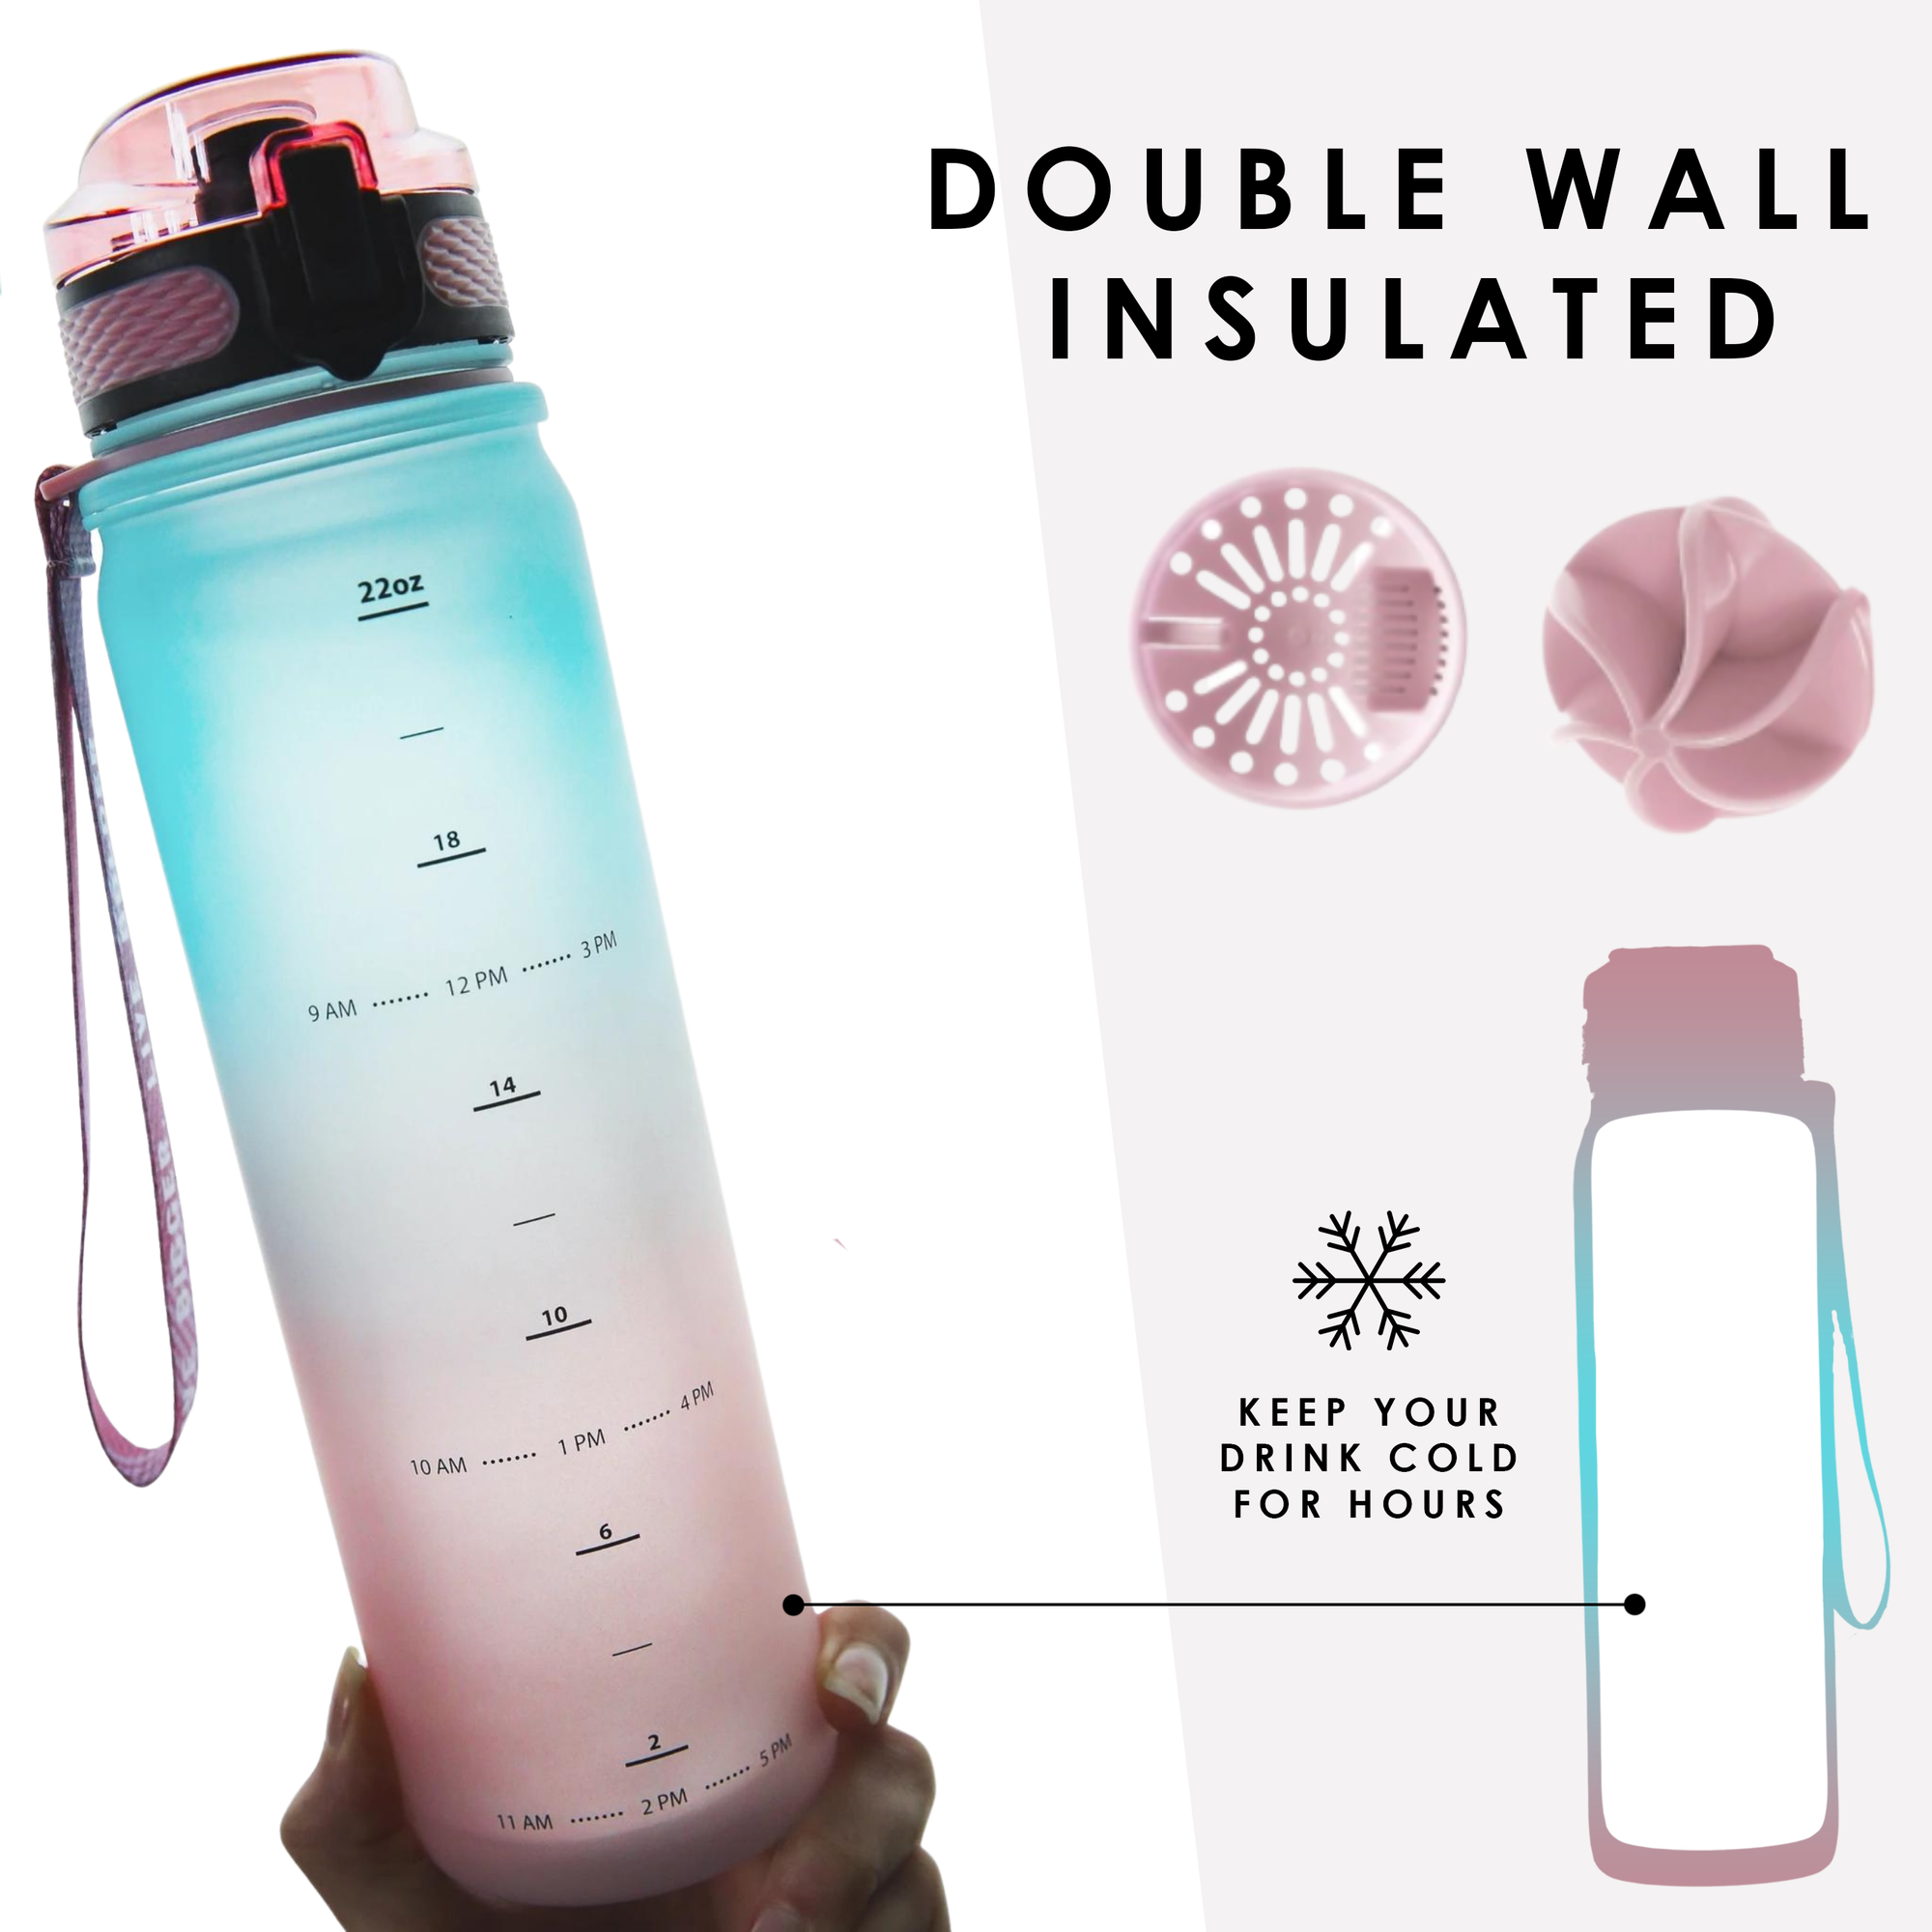 22 Oz. Lightweight Single Wall Plastic Water Bottles